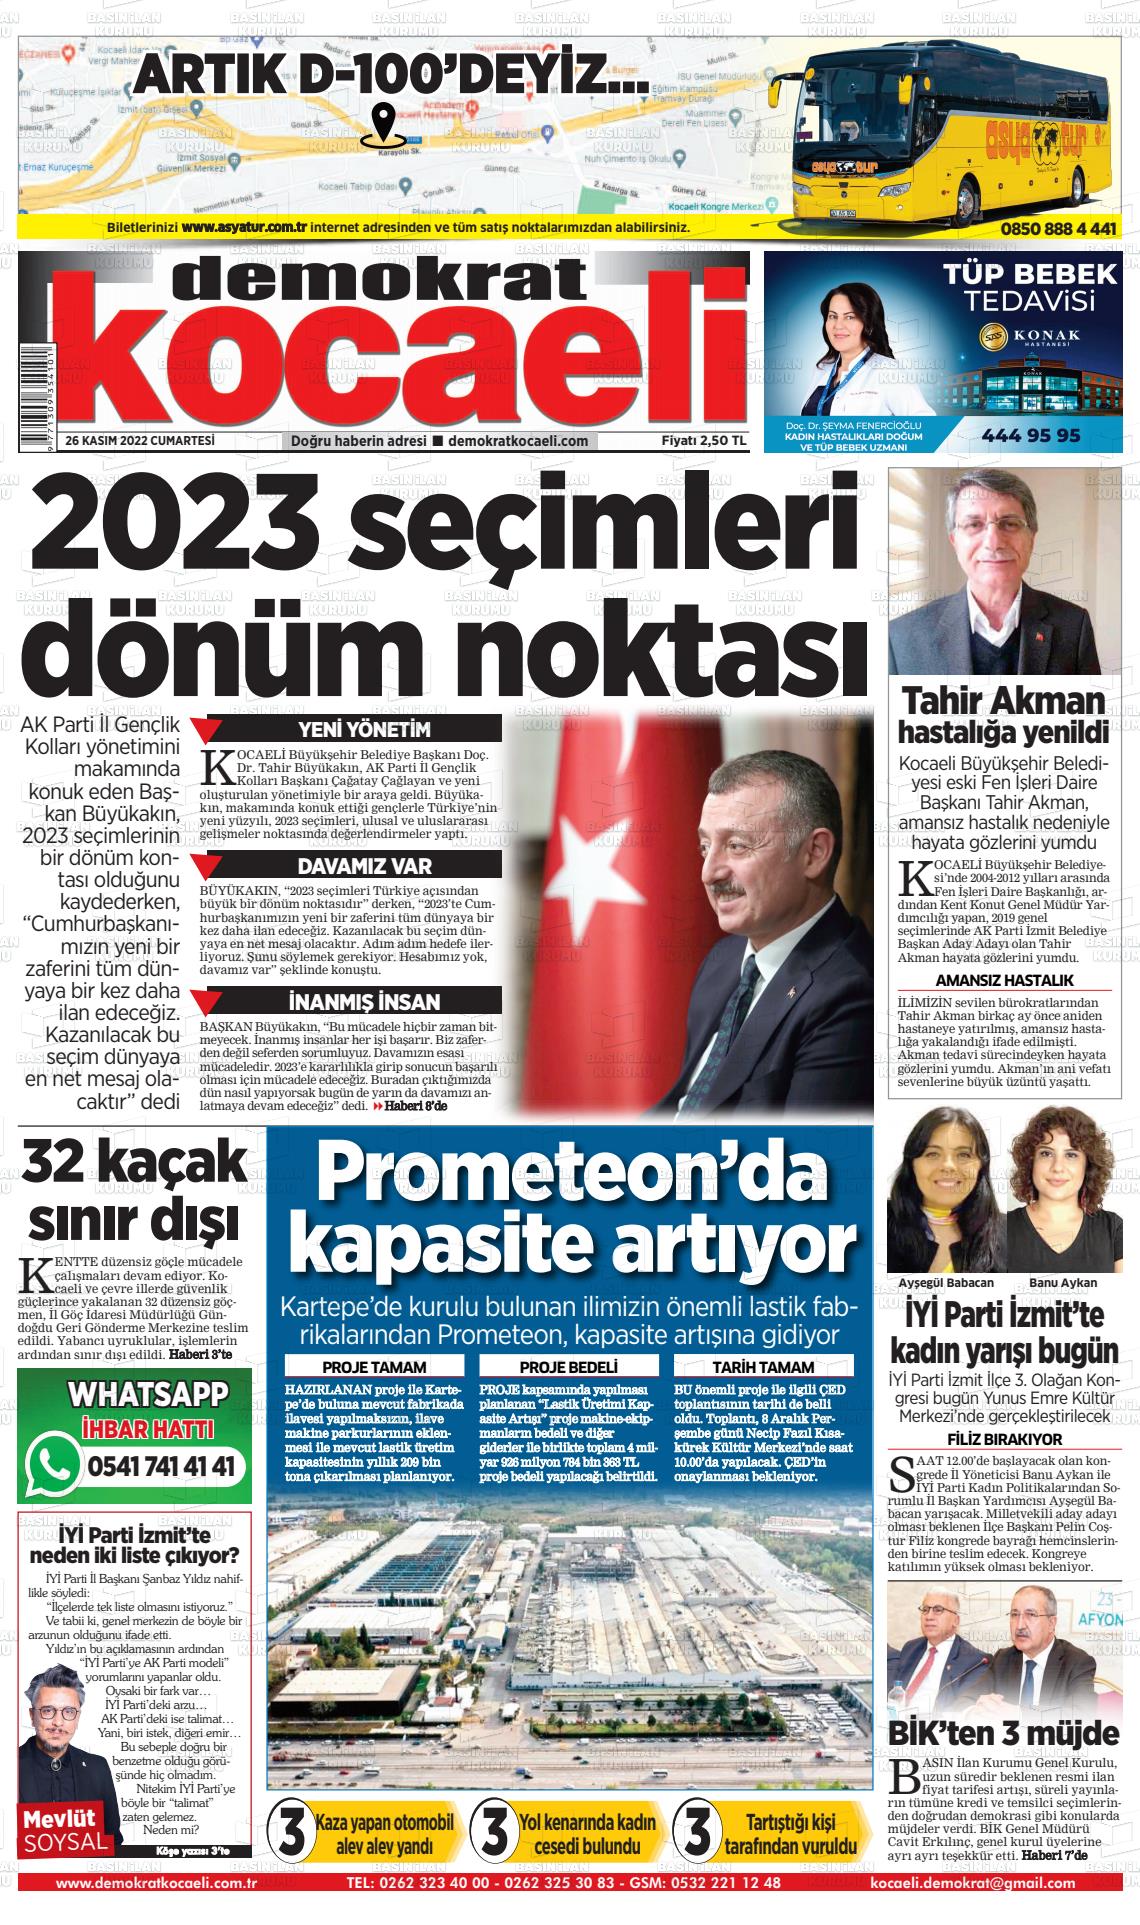 26 Kasım 2022 Demokrat Kocaeli Gazete Manşeti